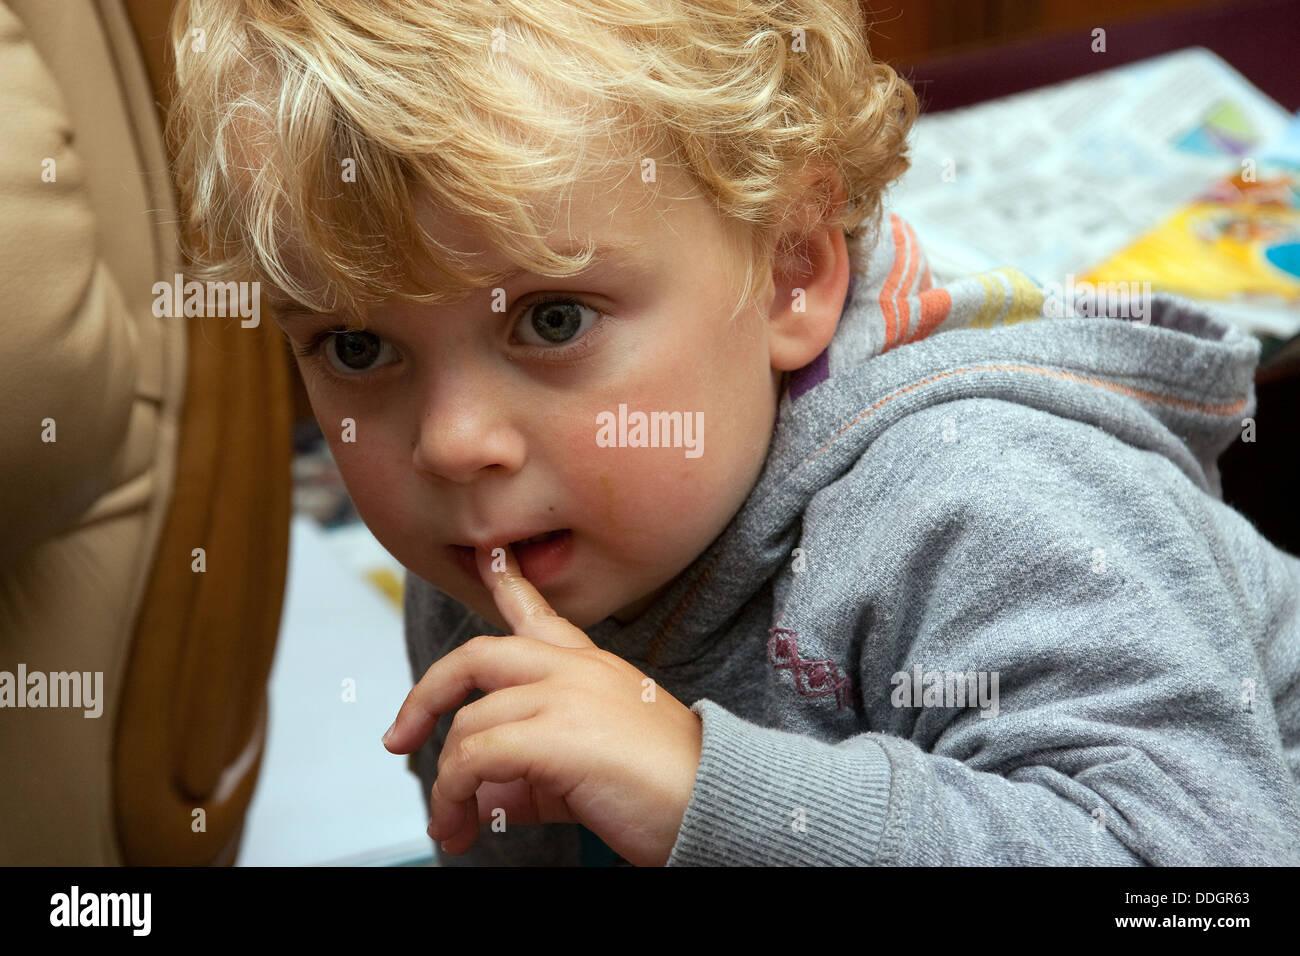 Family photos toddler boy finger in mouth Stock Photo